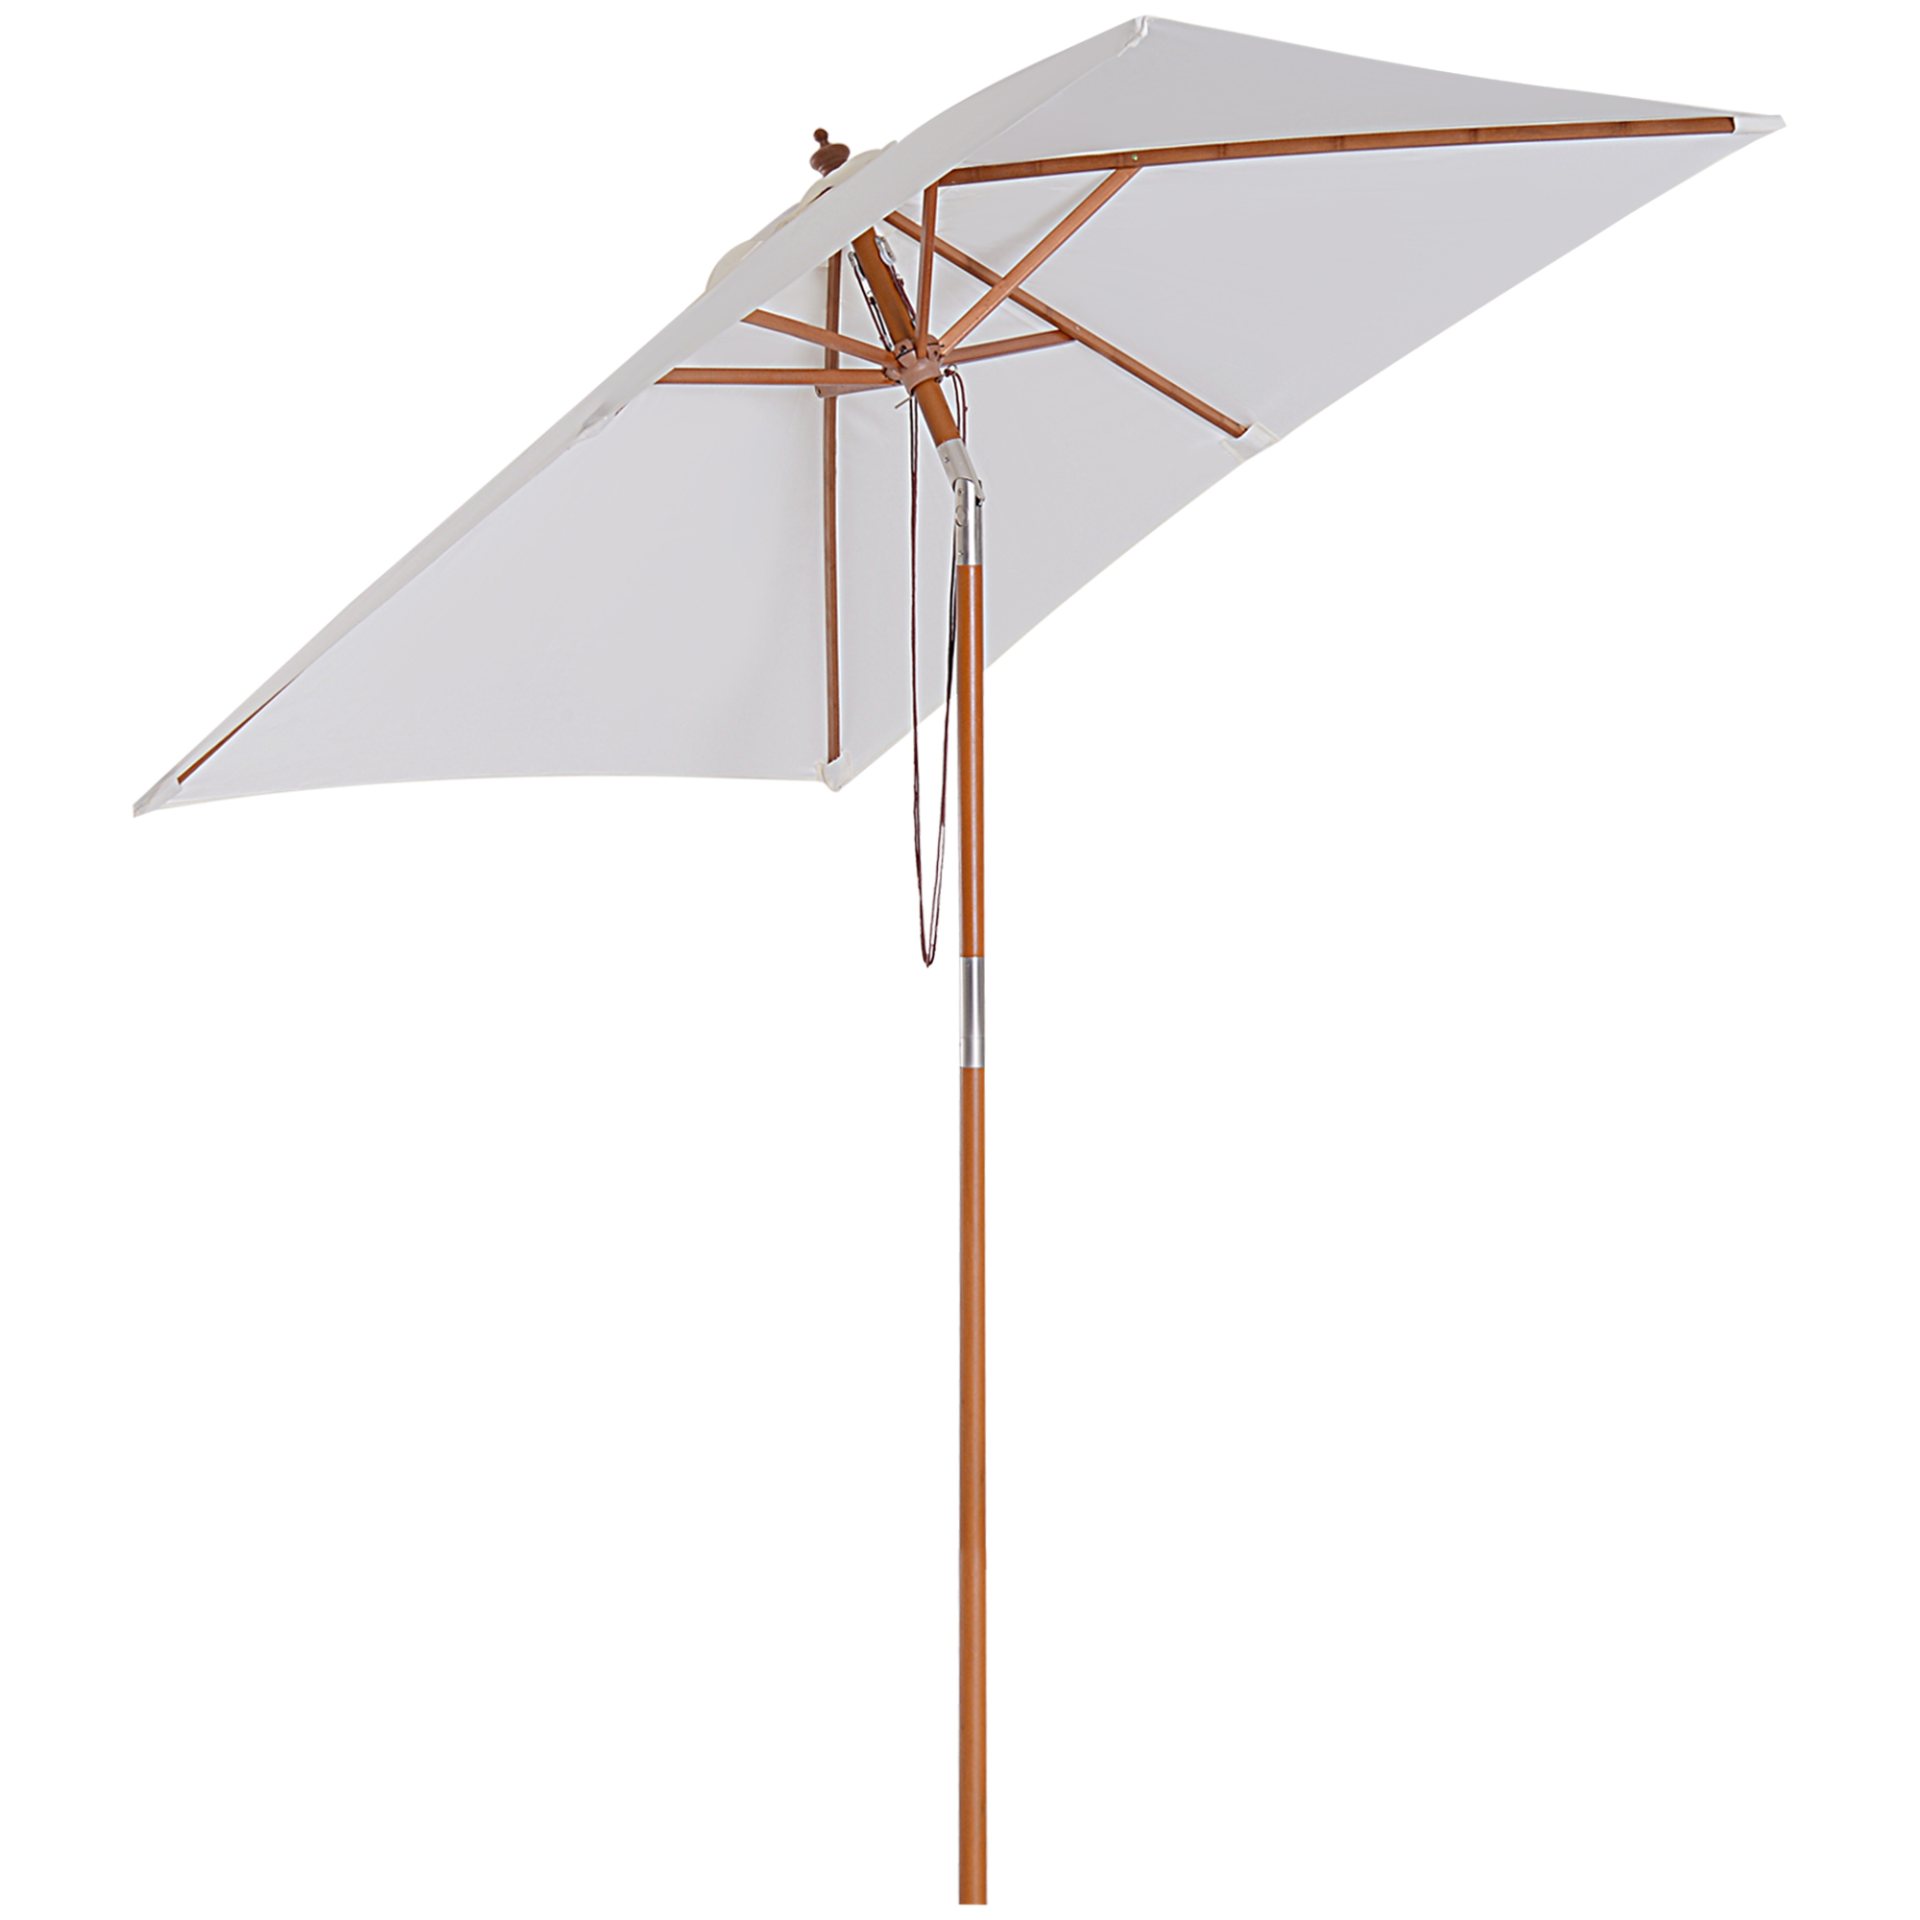 Outsunny 2m x 1.5m Patio Parasol Garden Umbrellas Sun Umbrella Bamboo Sunshade Canopy Outdoor Backyard Furniture Fir Wooden Pole 6 Ribs Tilt Mechanism -  Cream White